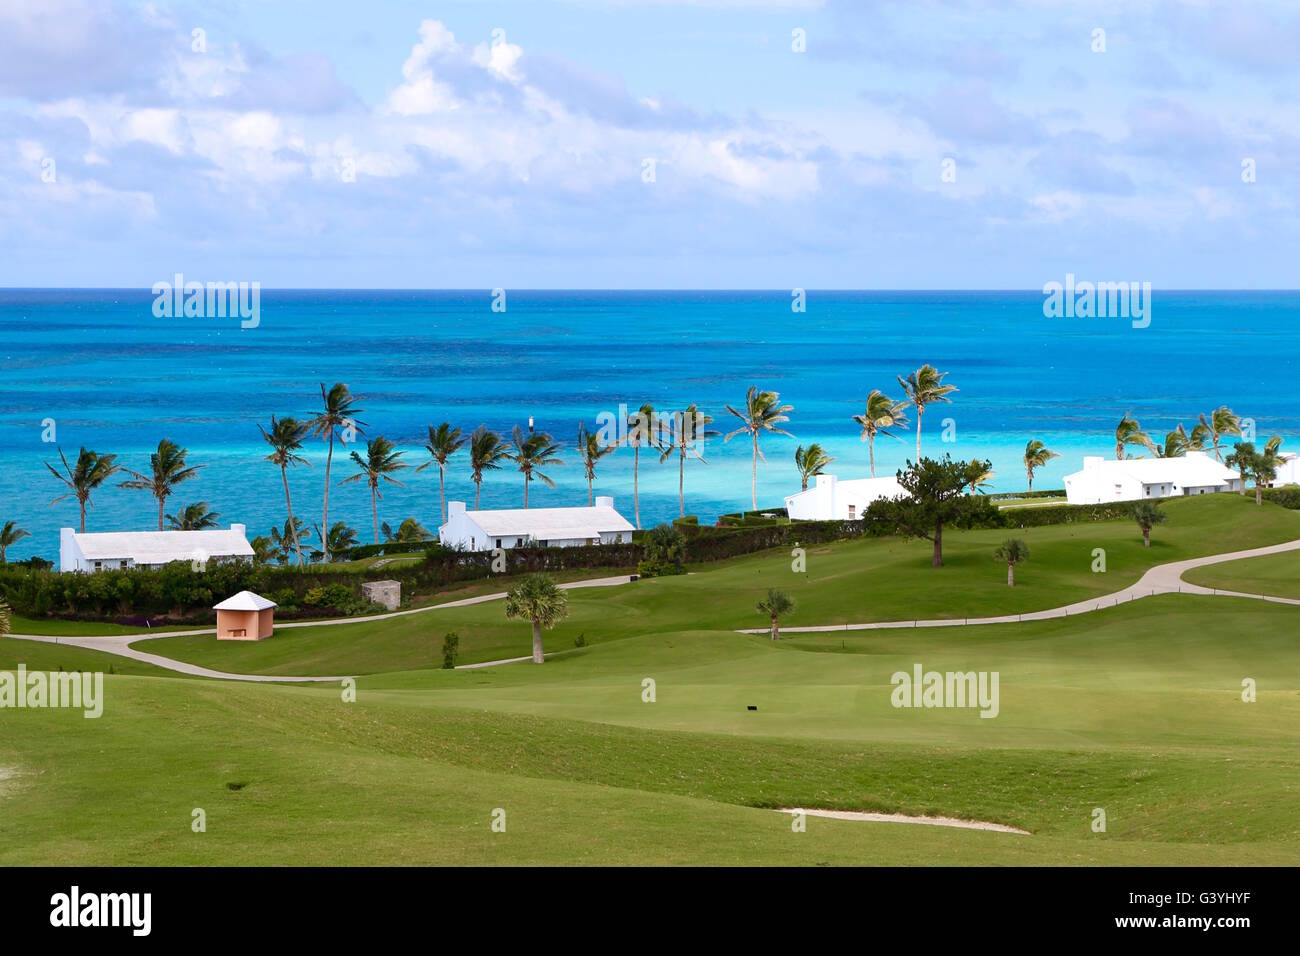 Golf course in Bermuda Stock Photo